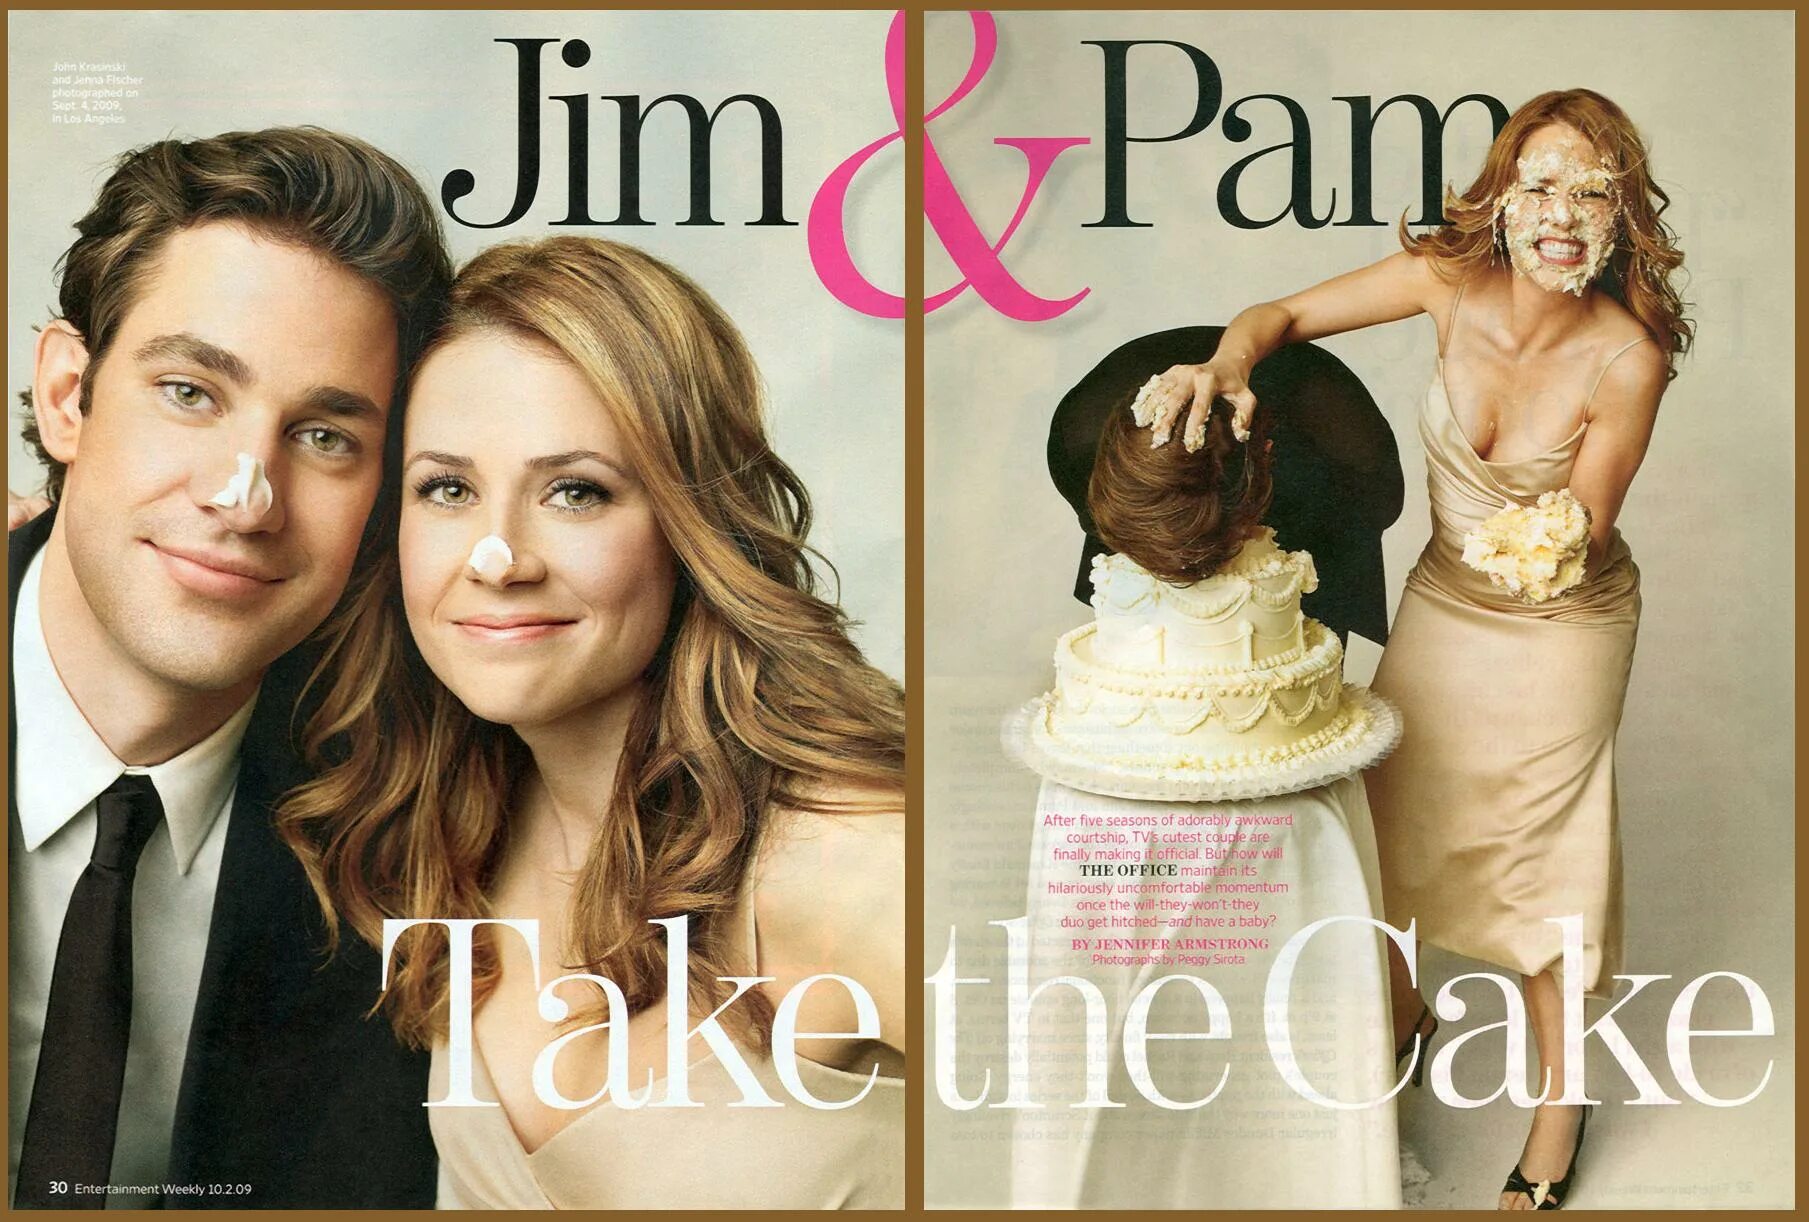 Jim and Pam. Джим халперт и Пэм. Джим халперт Пэм свадьба. Свадьба Джима и Пэм.